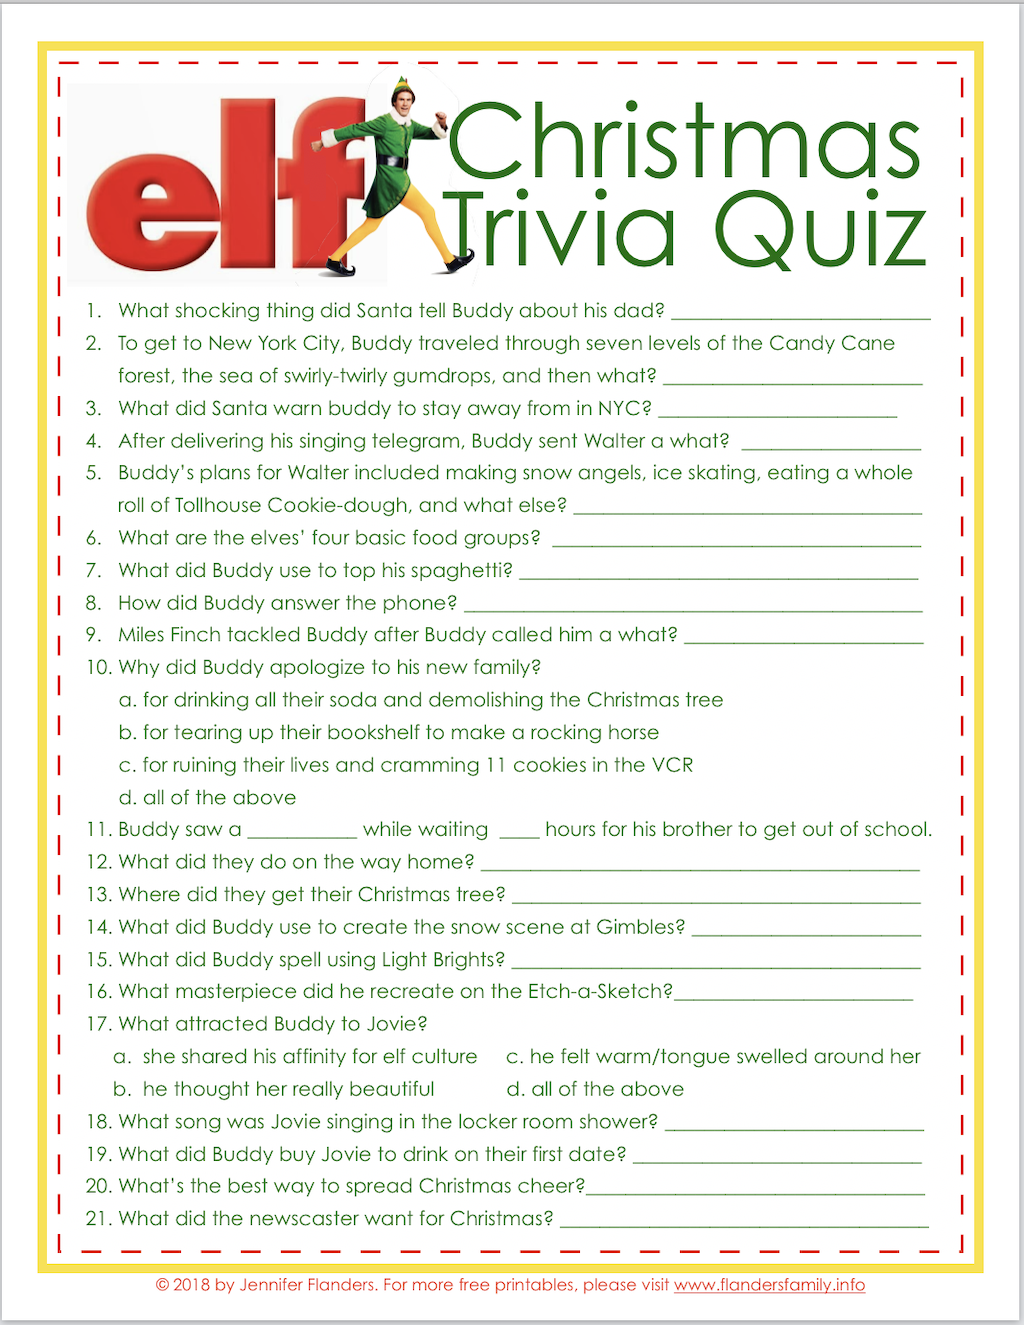 elf-trivia-christmas-quiz-free-printable-flanders-family-homelife